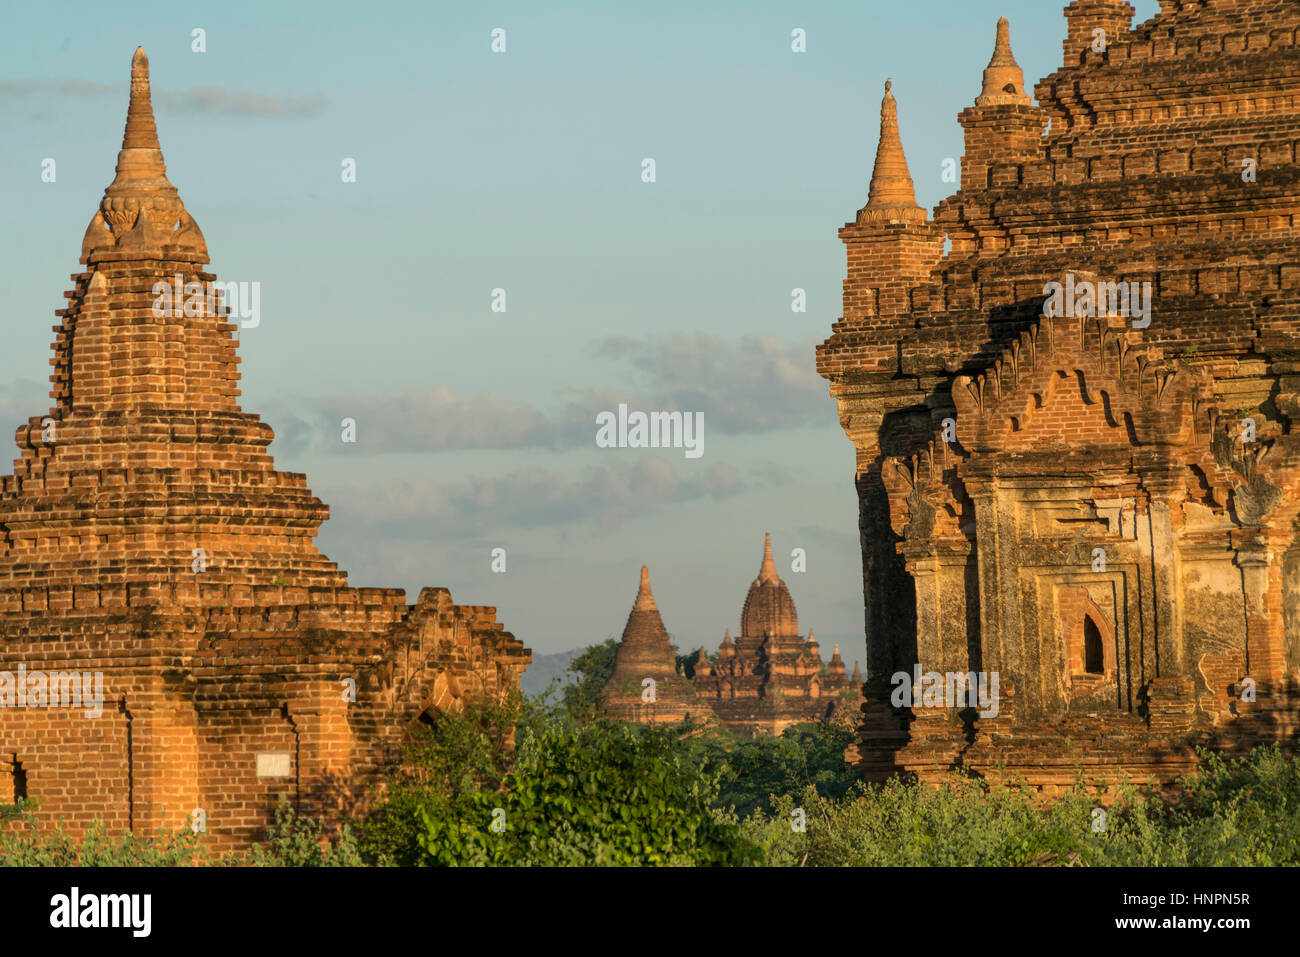 Tempel und Pagoden in der Ebene von Bagan, Myanmar, Asien  |  Bagan Plains temples and pagodas, Bagan, Myanmar, Asia Stock Photo